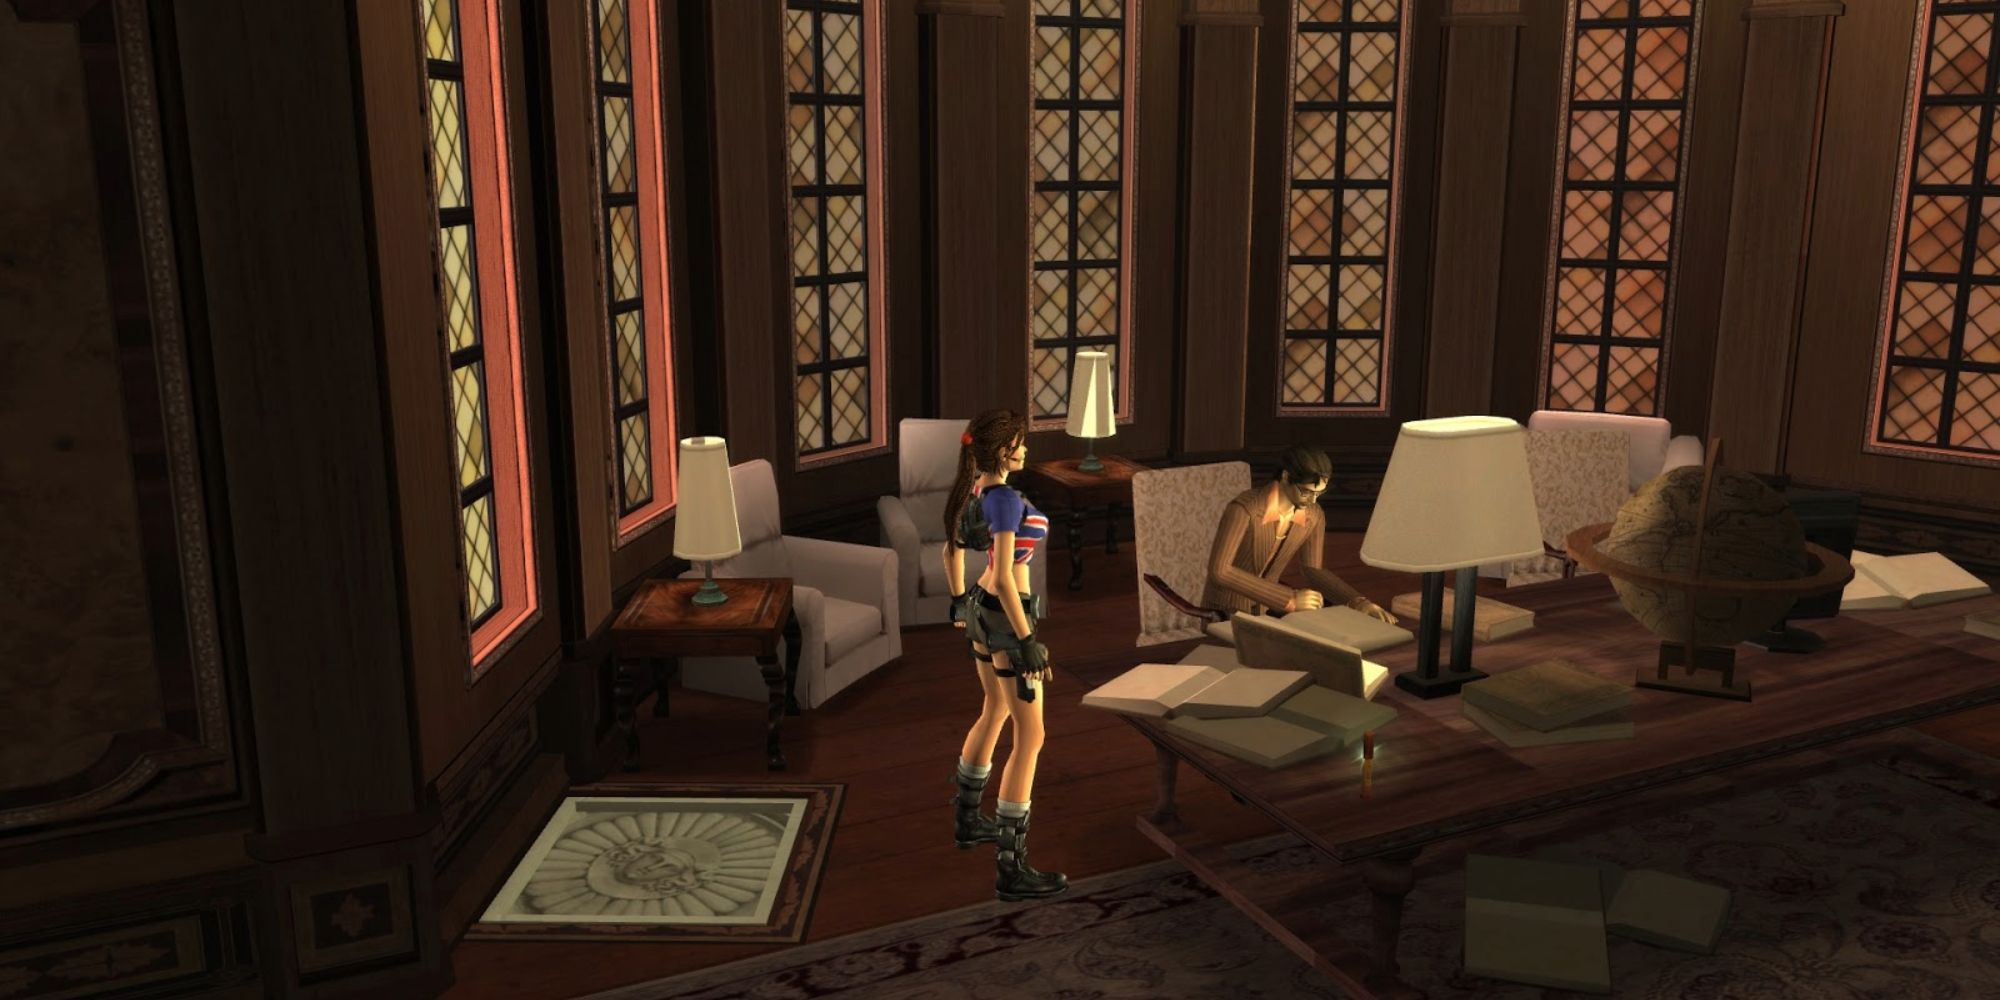 Lara Croft steht im Croft Manor Study